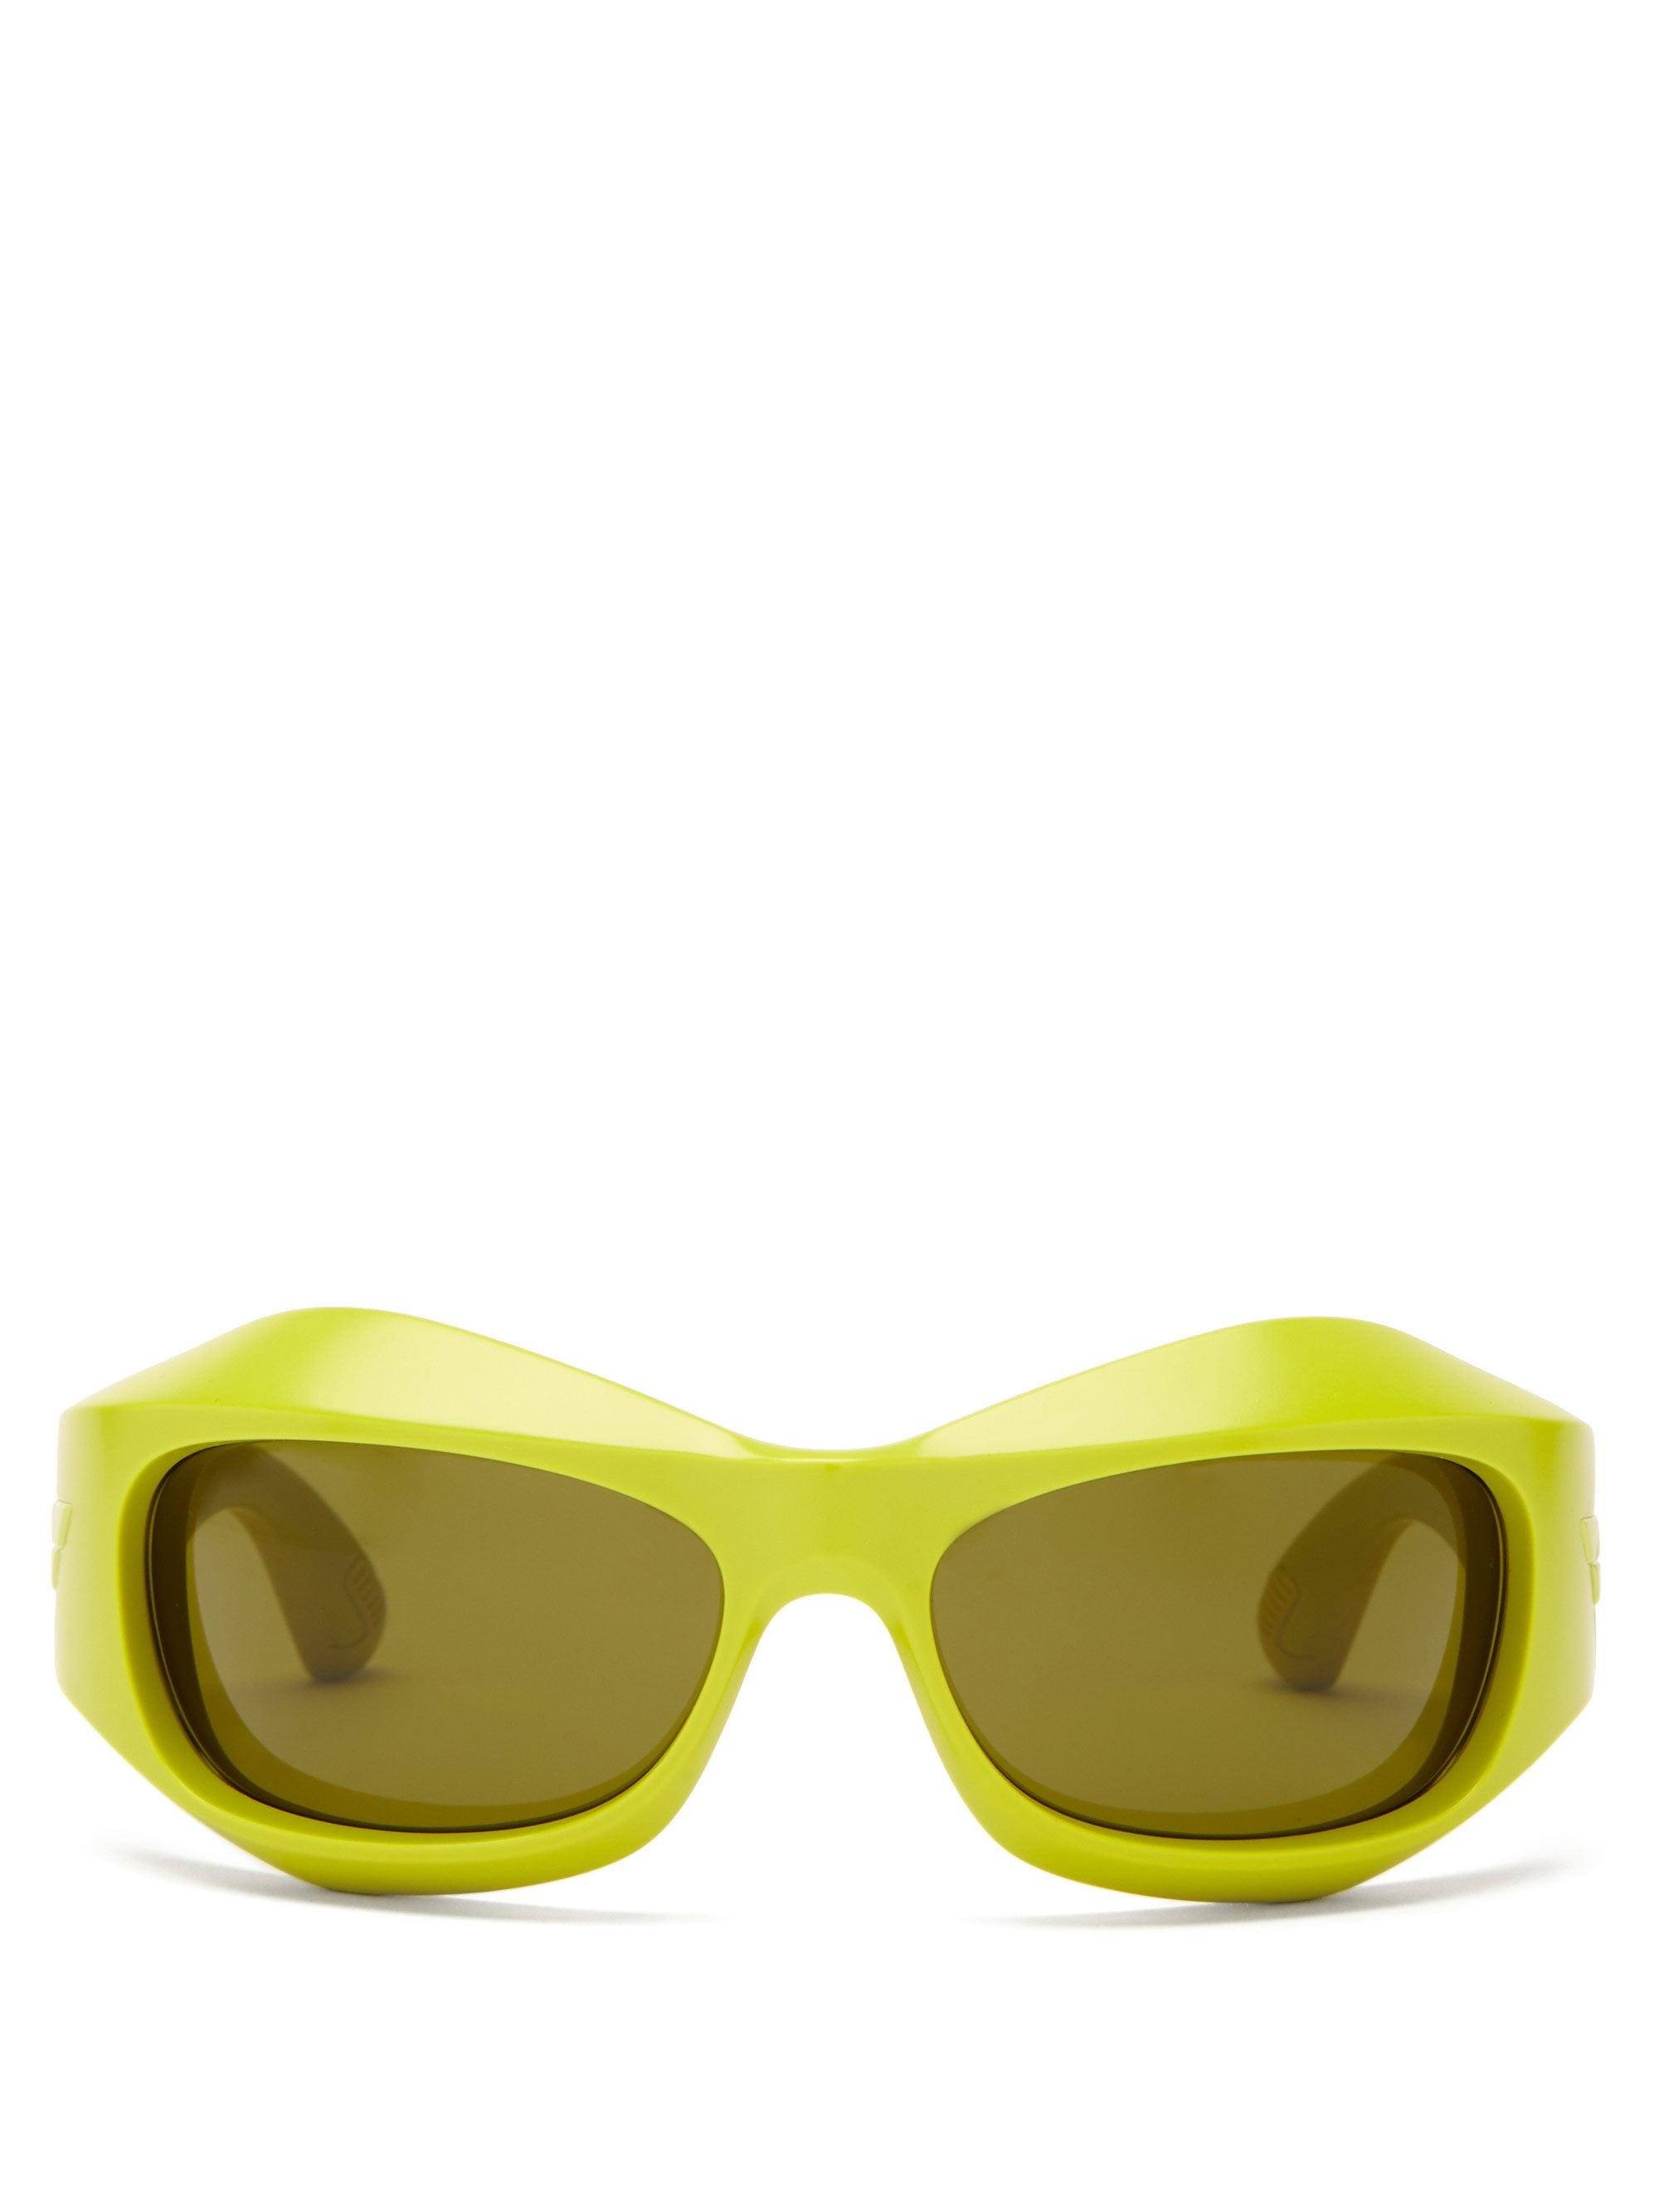 Bottega Veneta Mask Acetate Sunglasses in Green | Lyst